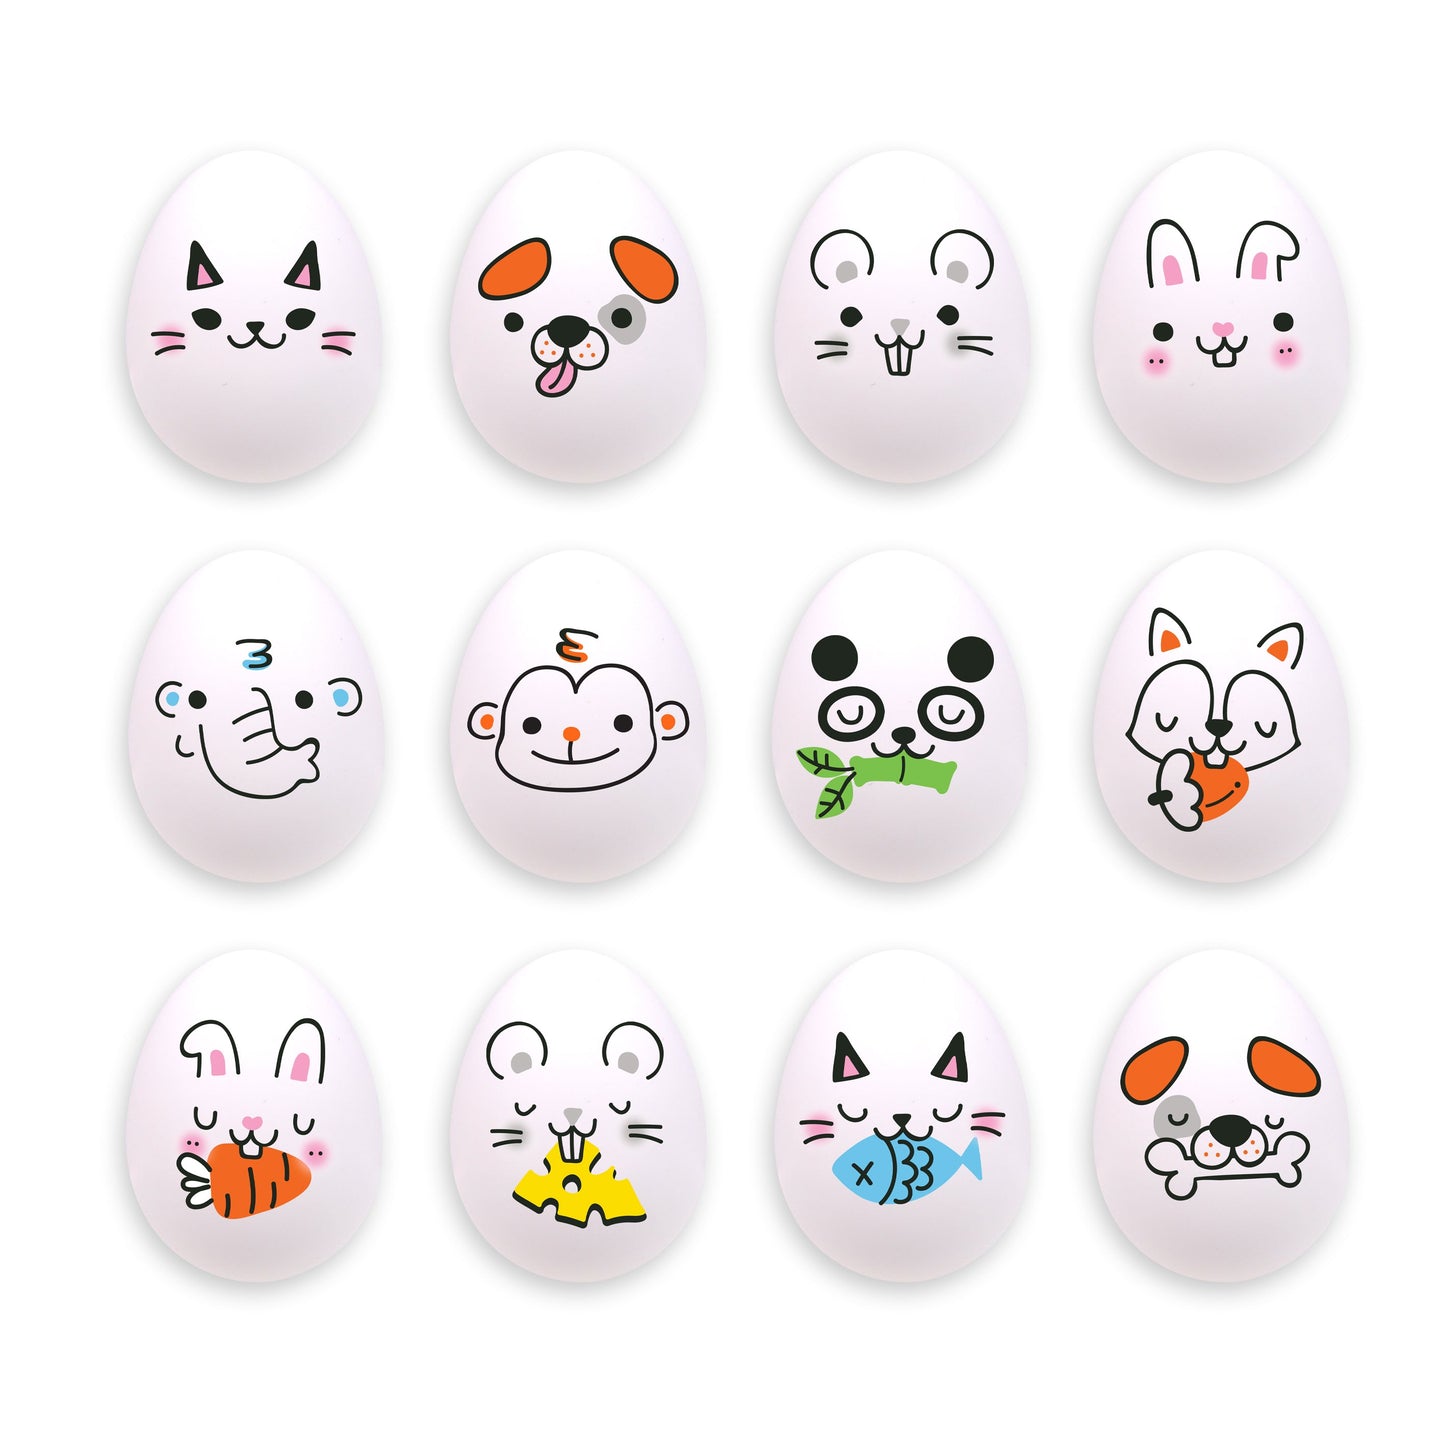 Mushimoto Squishy Mini Eggie - 24 Units/4 Packs